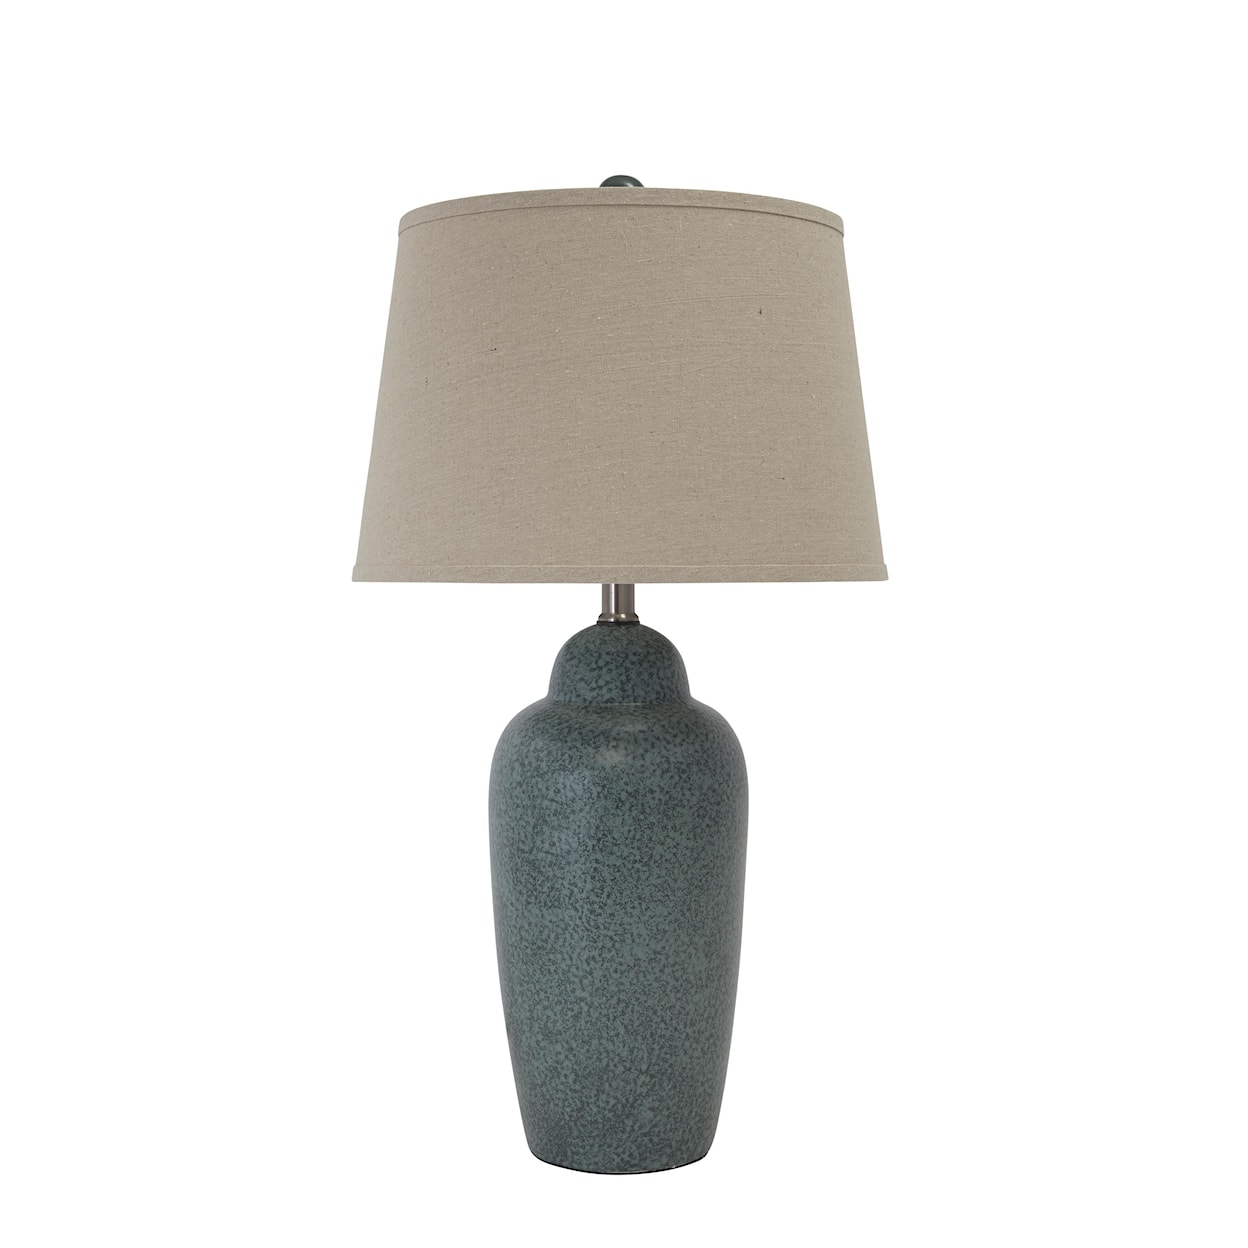 Ashley Furniture Signature Design Lamps - Contemporary Ceramic Table Lamp 